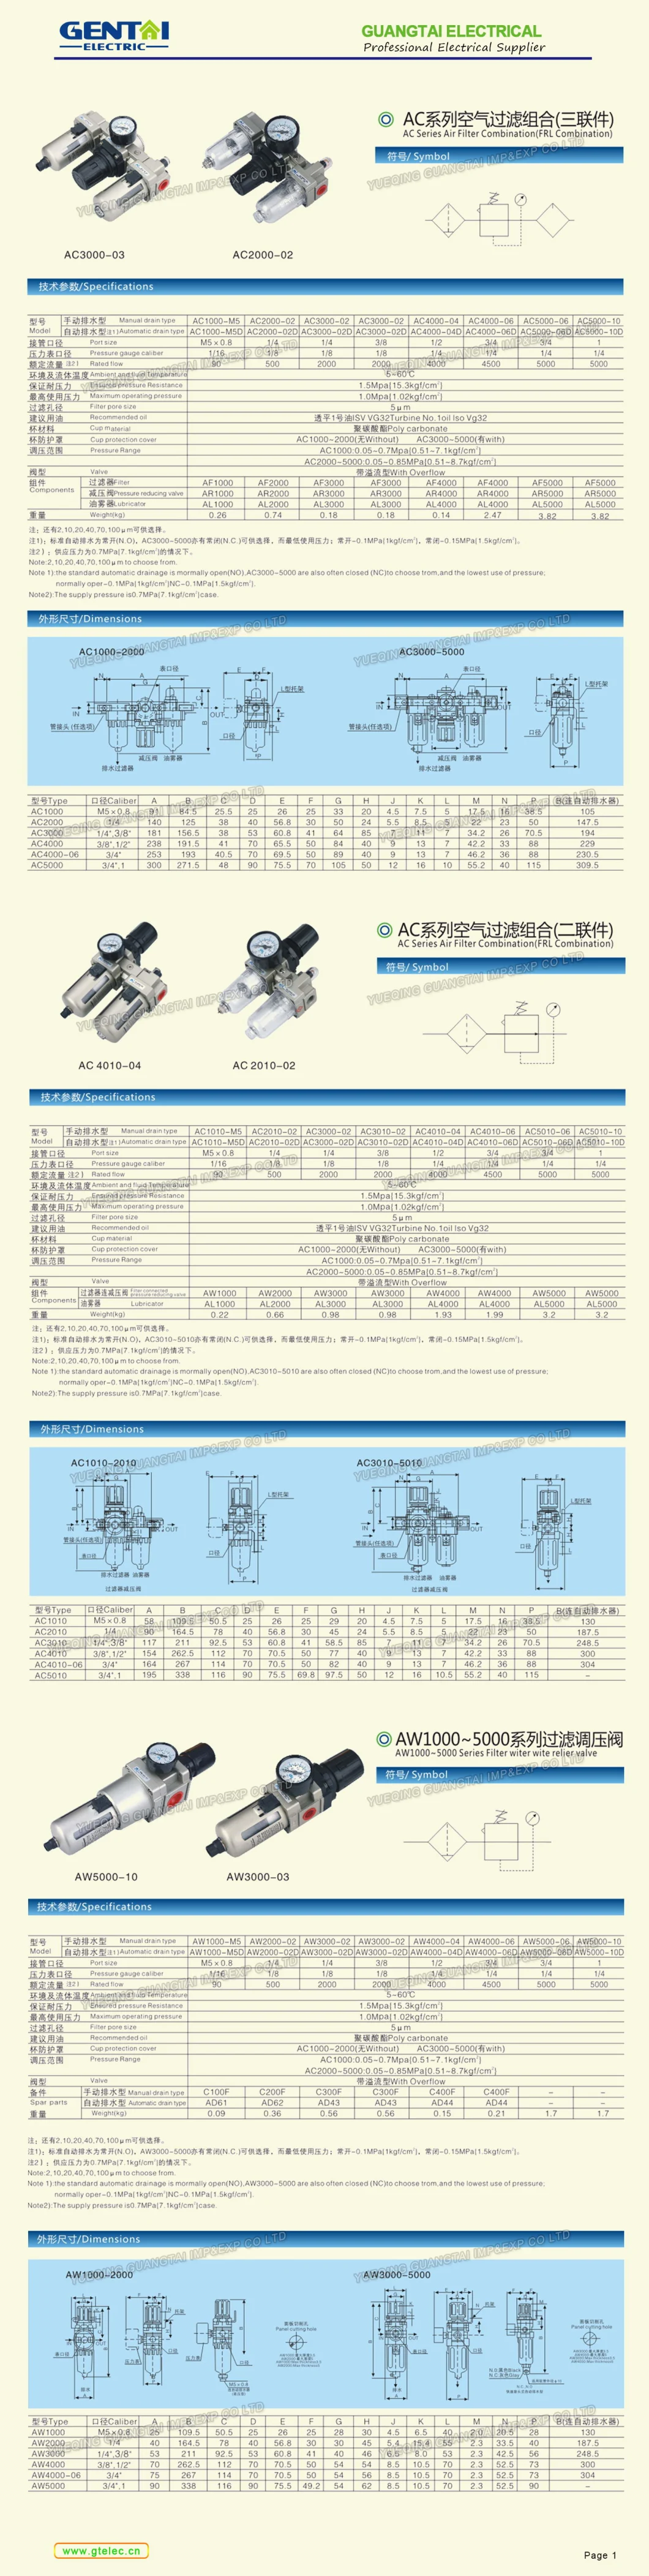 AC2010-02 Pneumatic Two Unit Frl Combination Air Filter Regulator & Lubricator